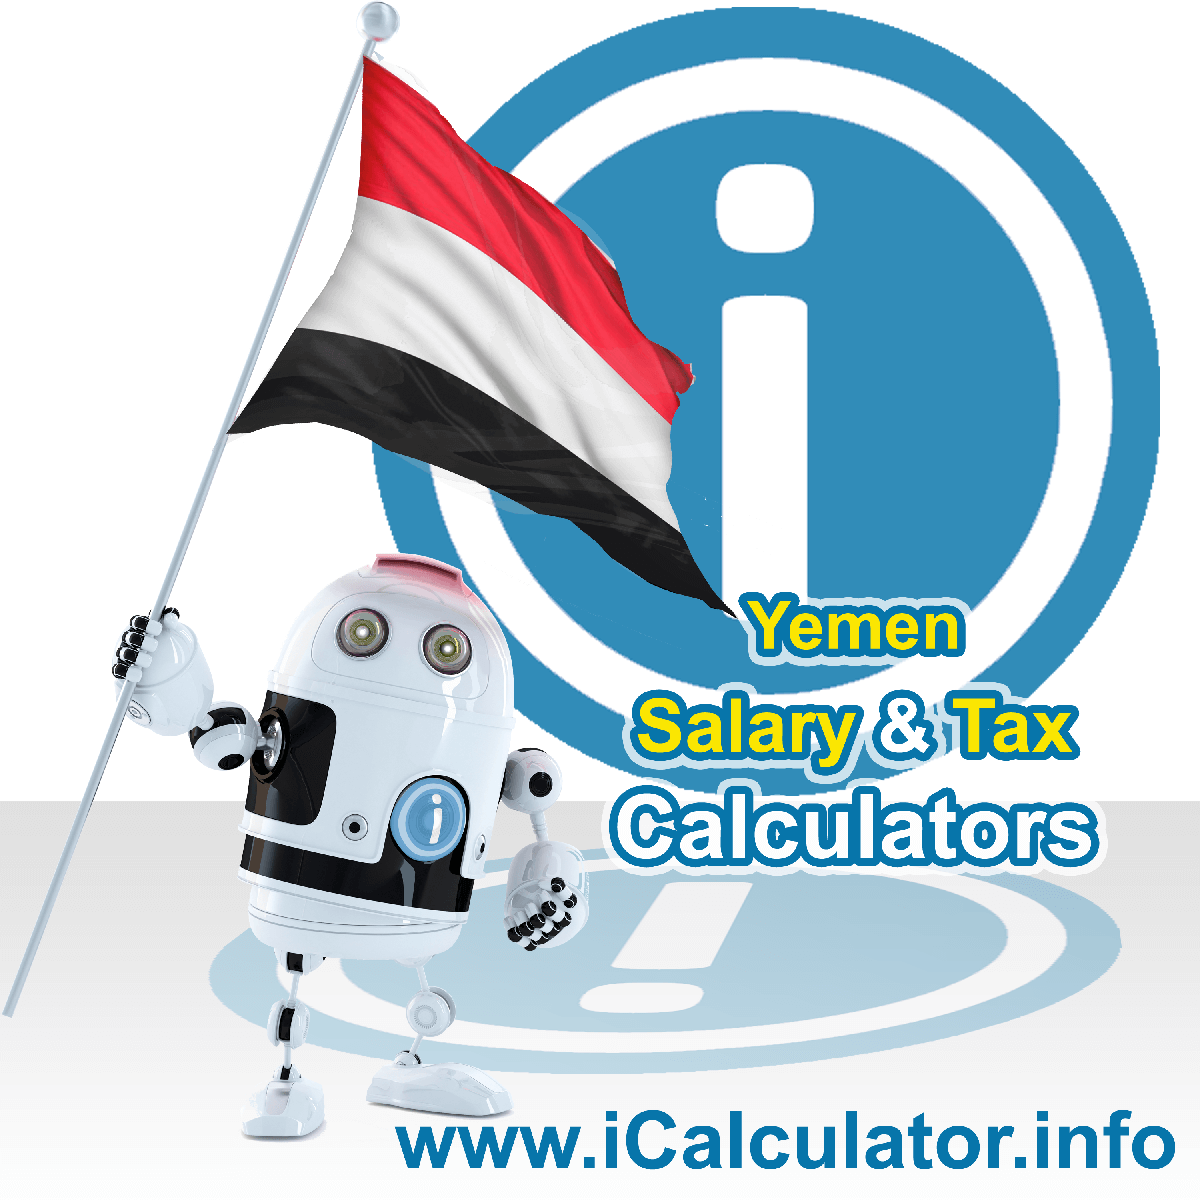 Yemen Salary Calculator. This image shows the Yemenese flag and information relating to the tax formula for the Yemen Tax Calculator